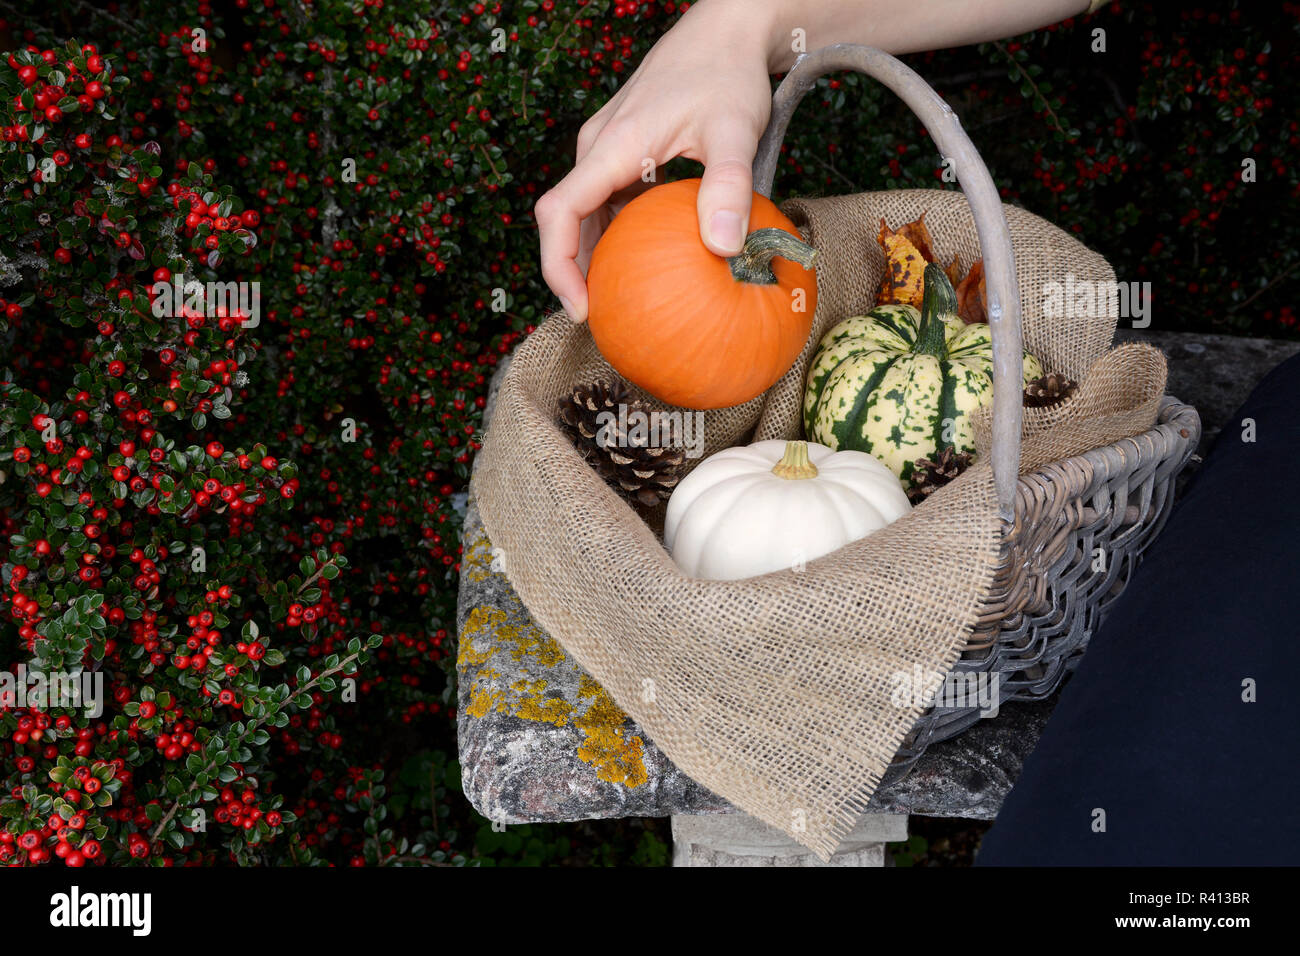 Woman places a sugar pumpkin into basket of autumn gourds Stock Photo